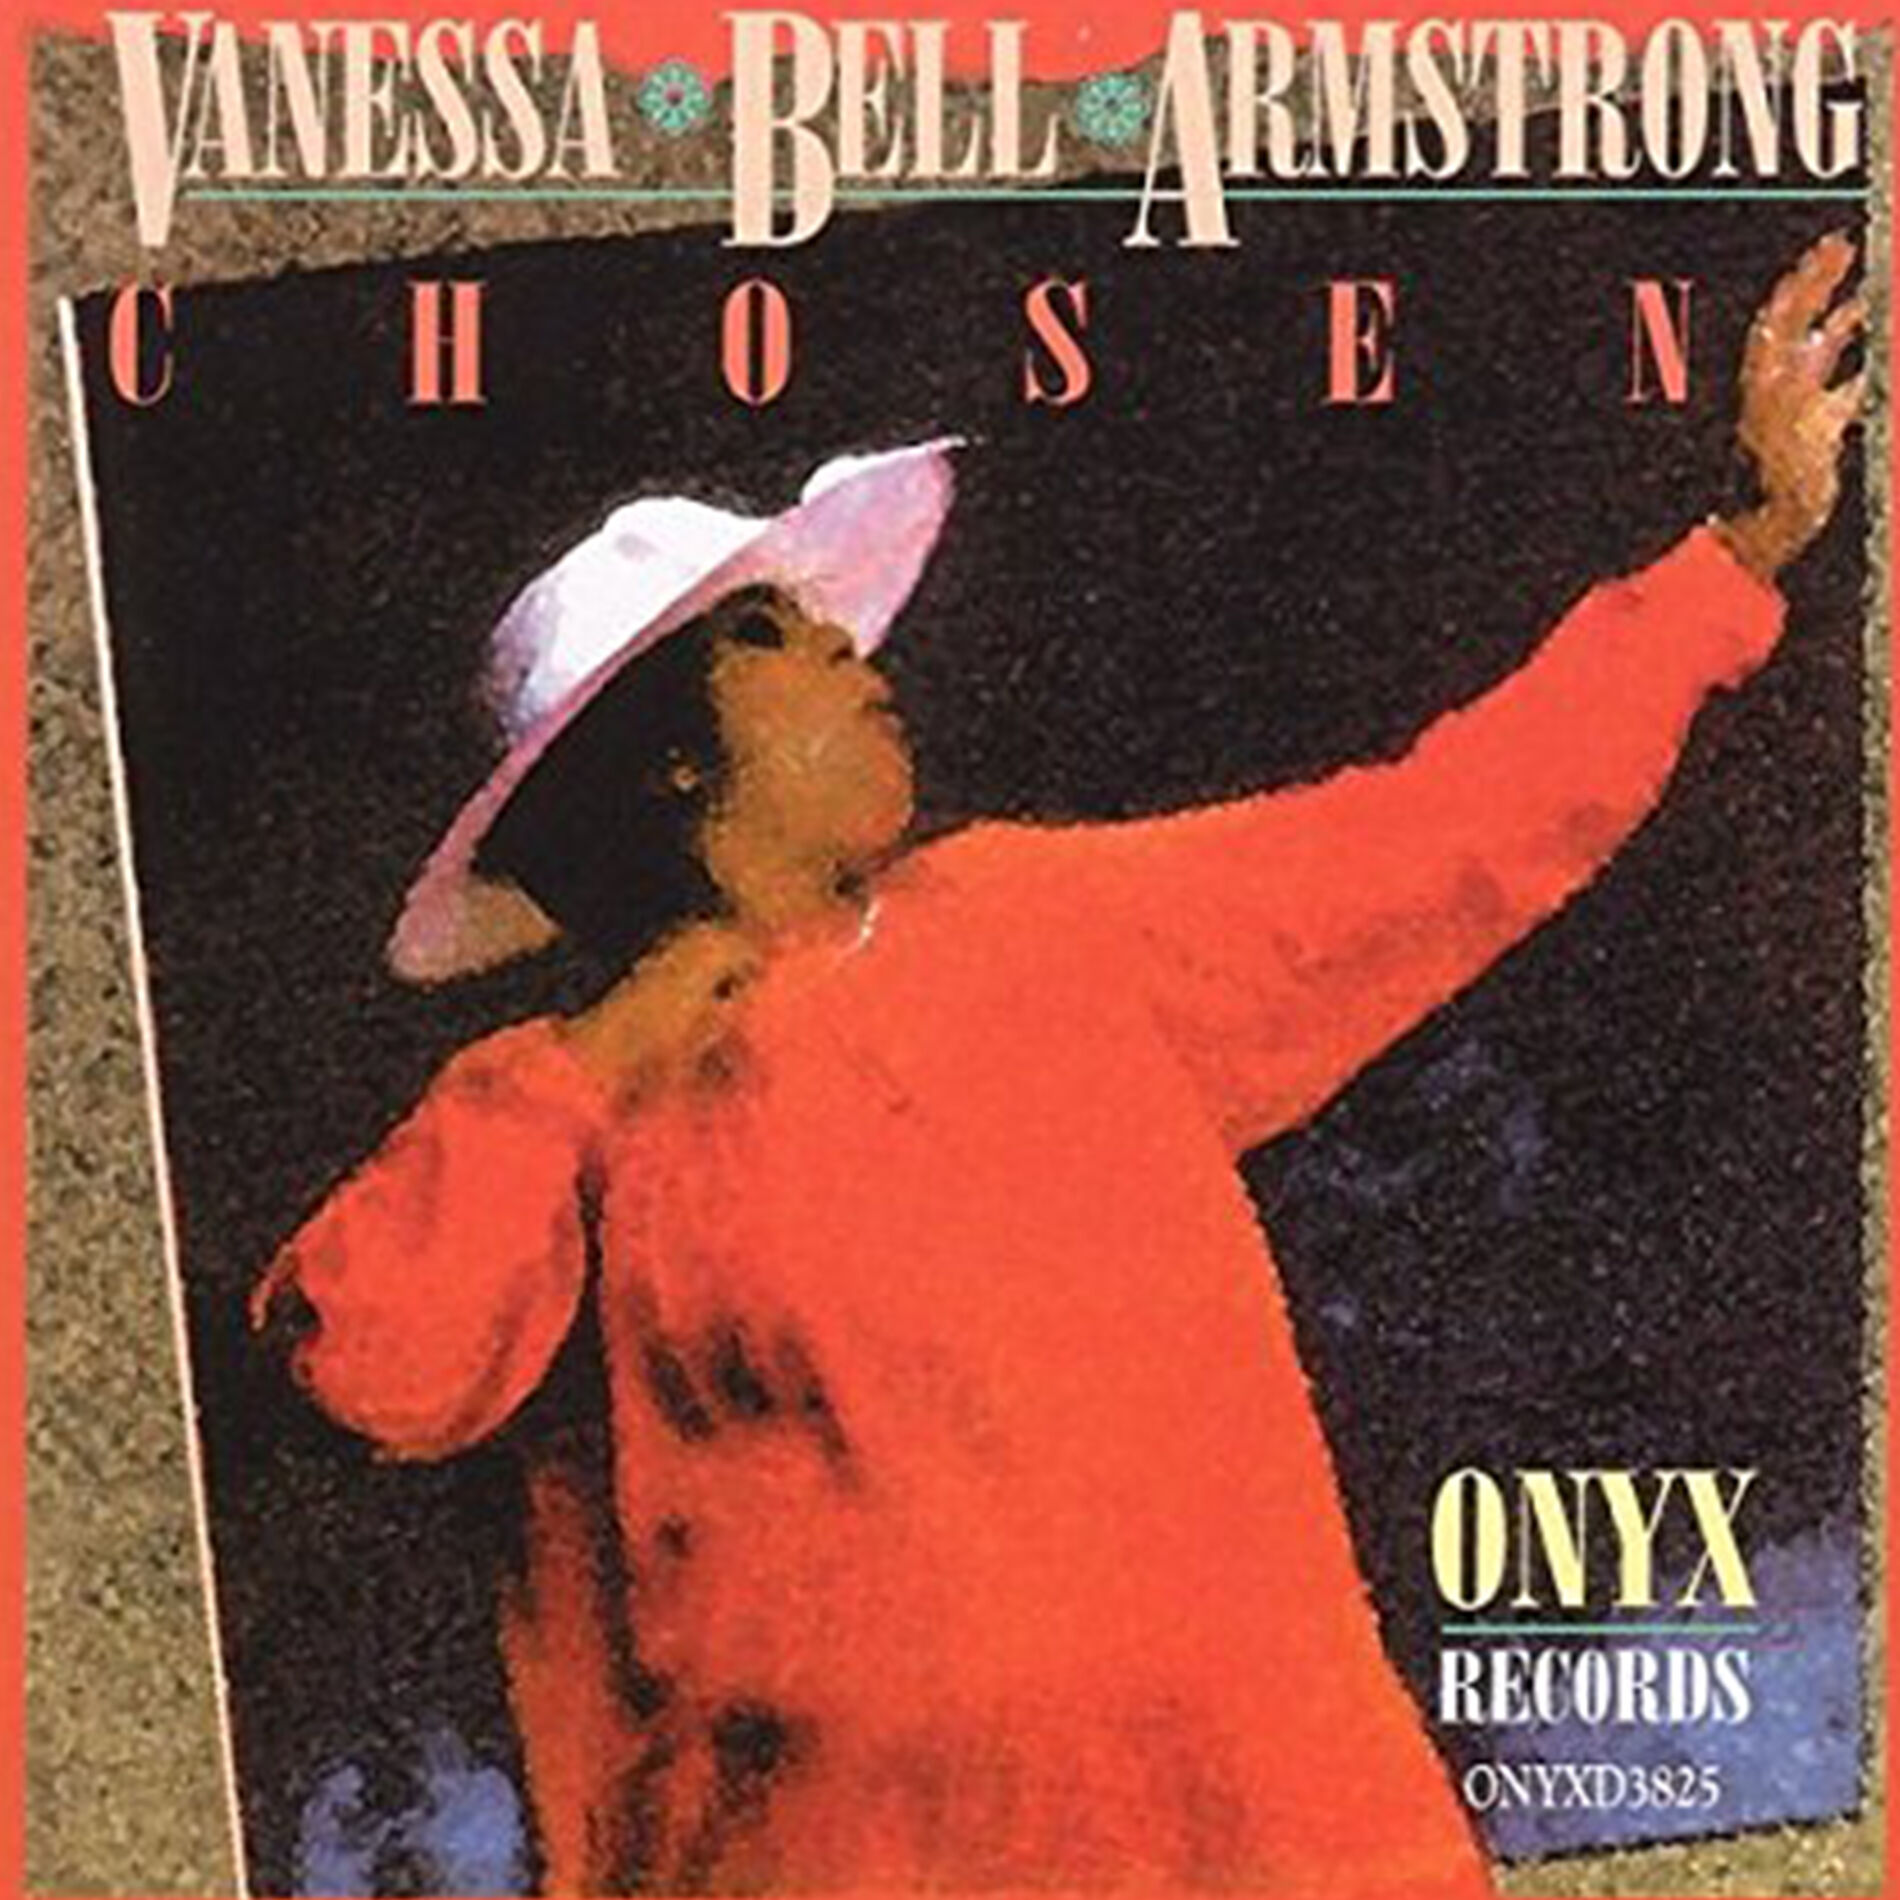 Vanessa Bell Armstrong: albums, songs, playlists | Listen on Deezer